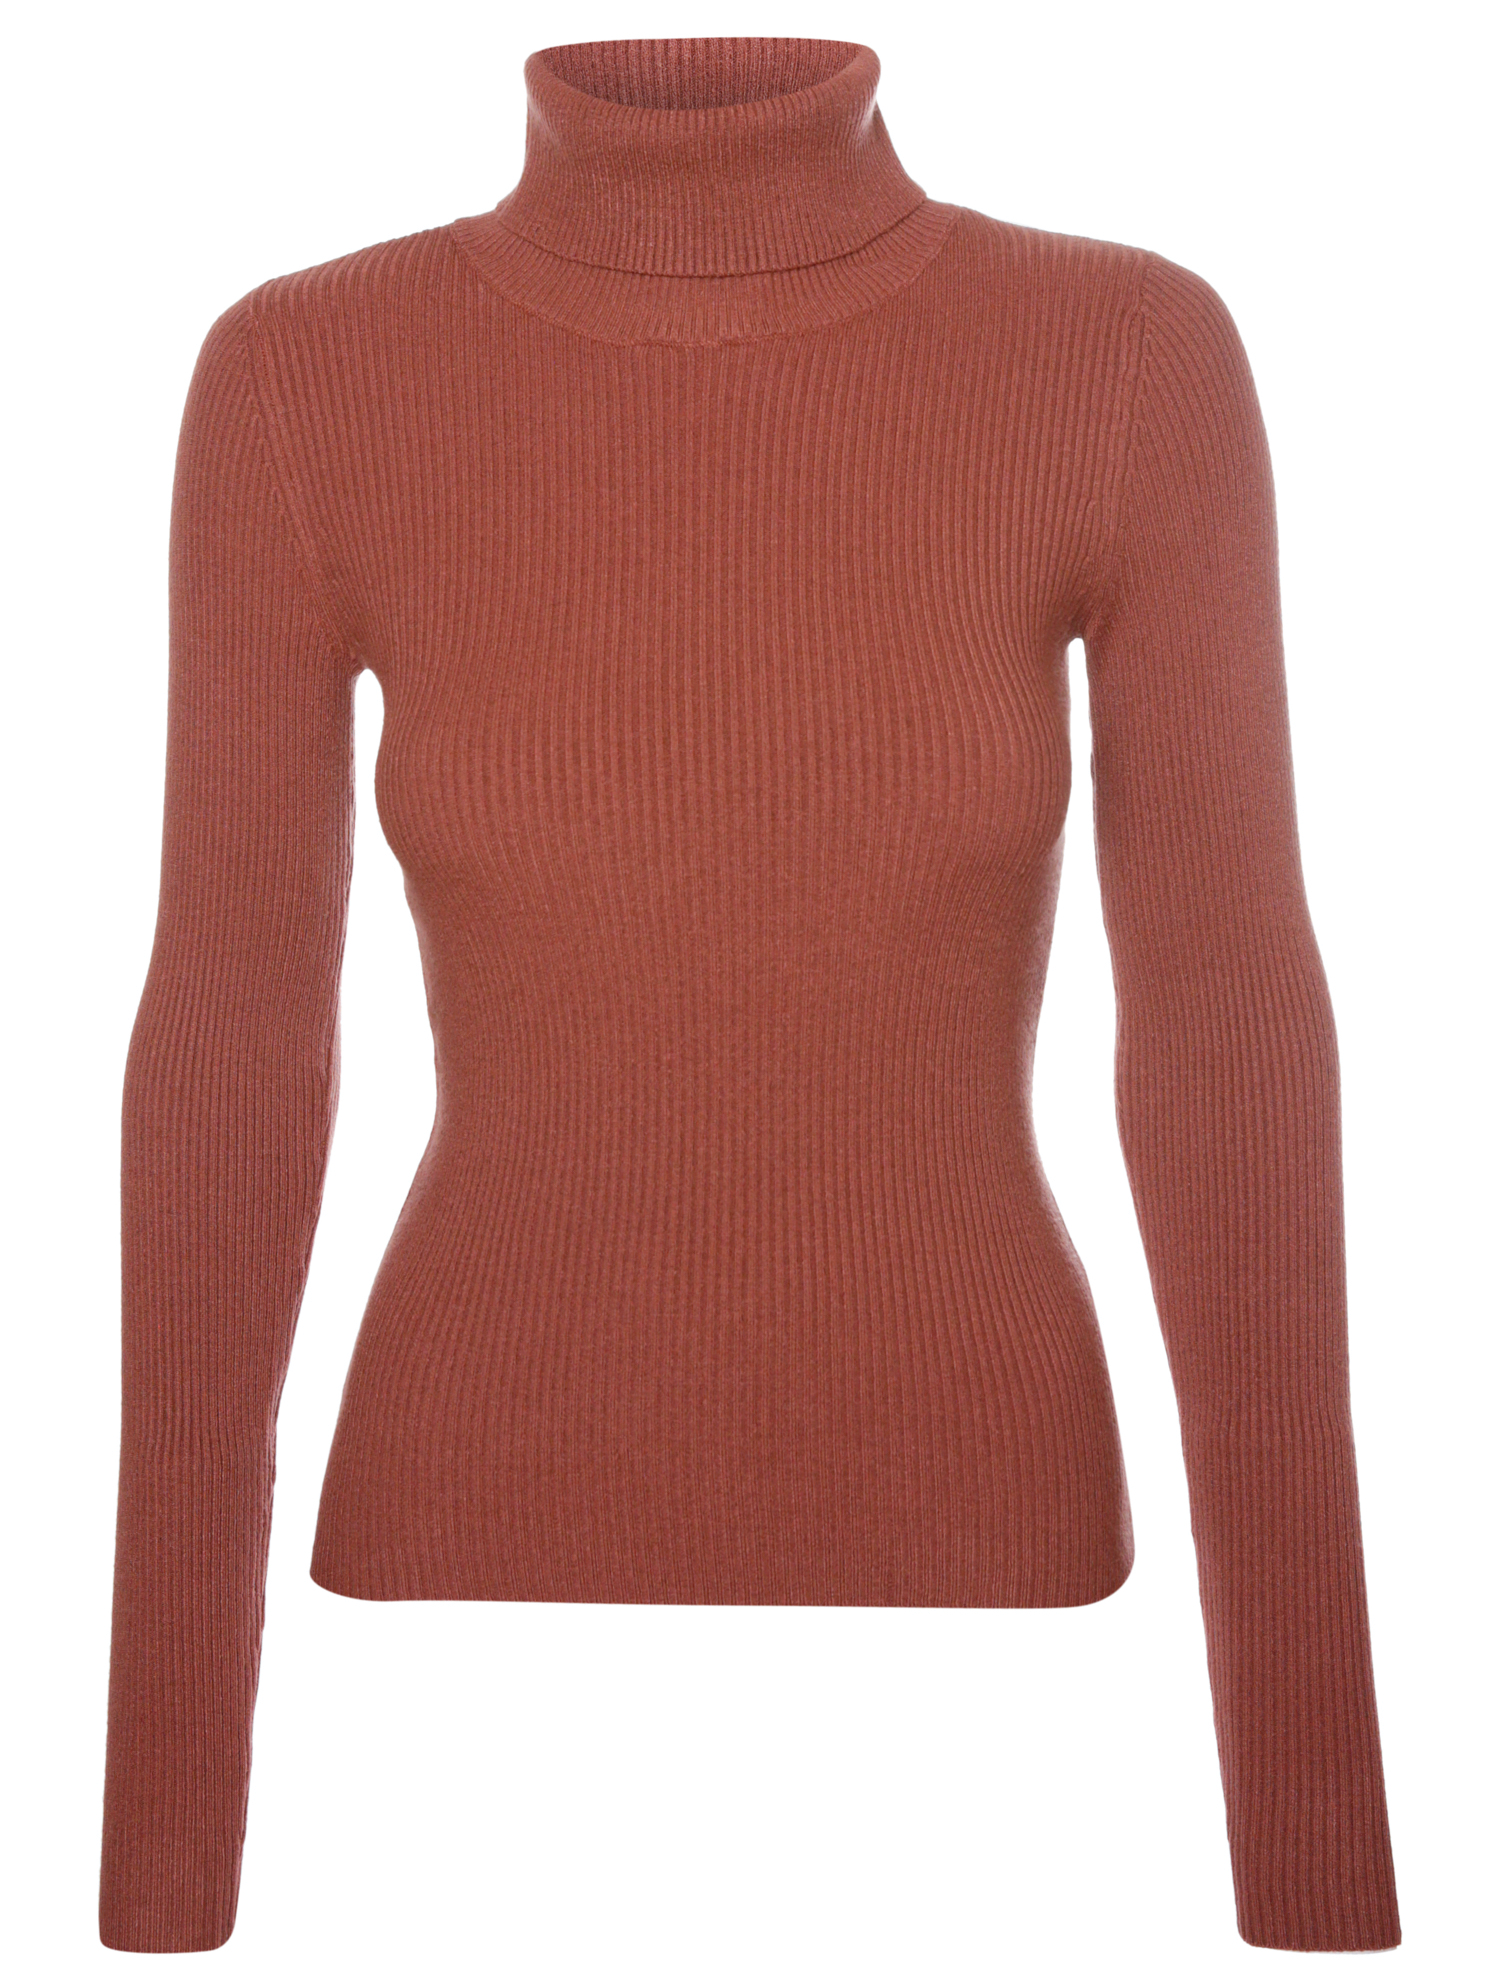 Long Sleeve Turtleneck Sweater Top